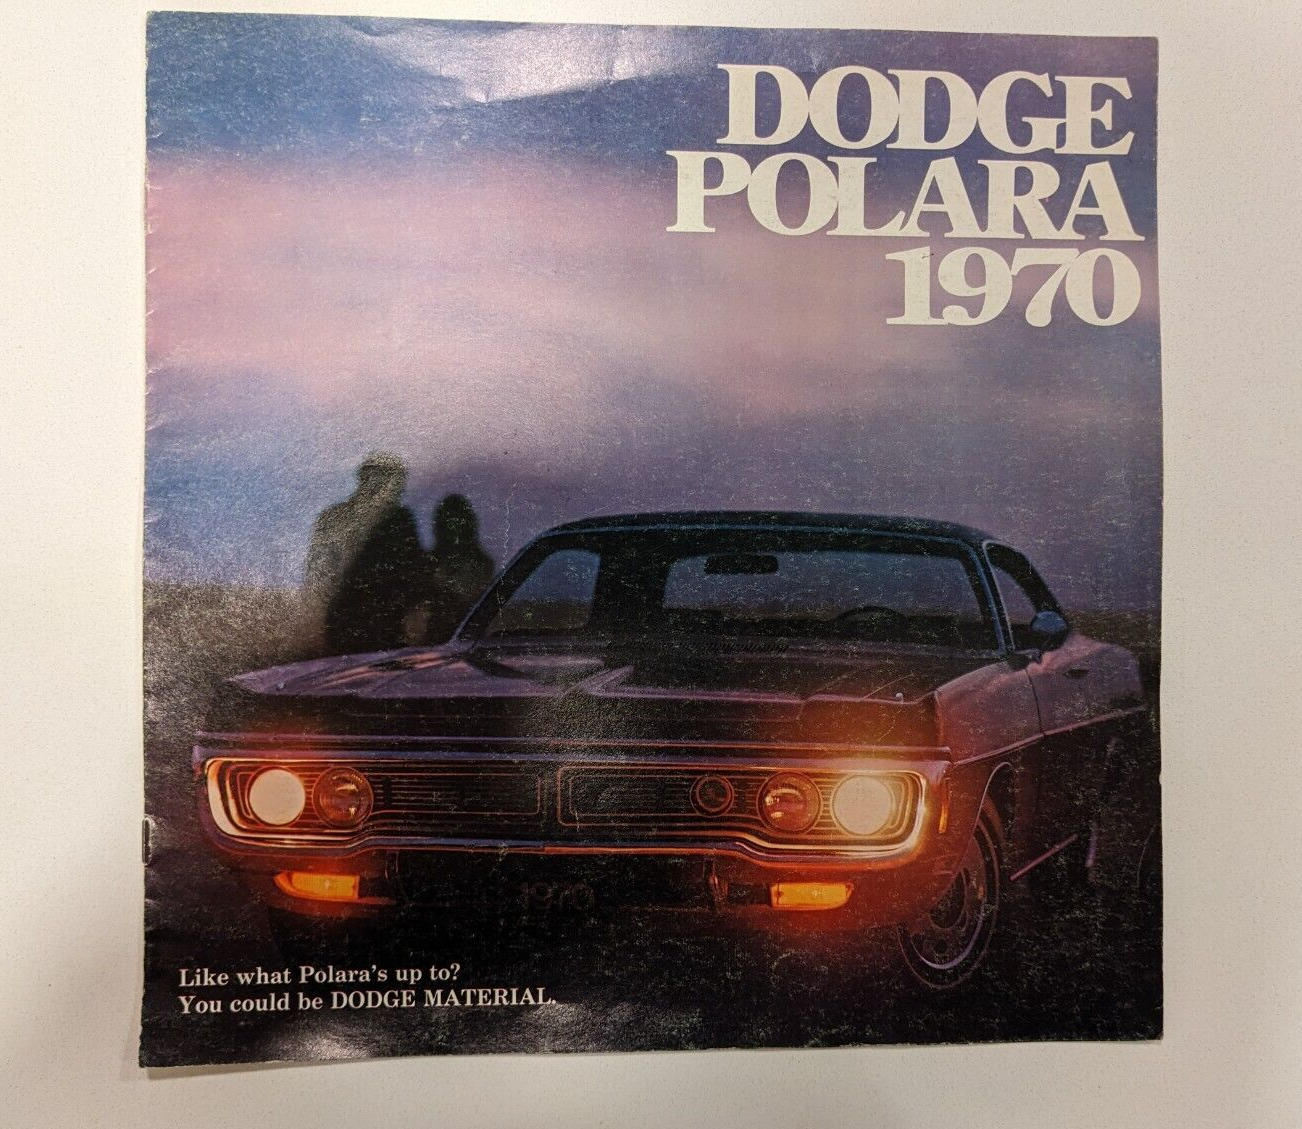 1970 Dodge Polara Sales Brochure. Original Vintage Promotional Advertising